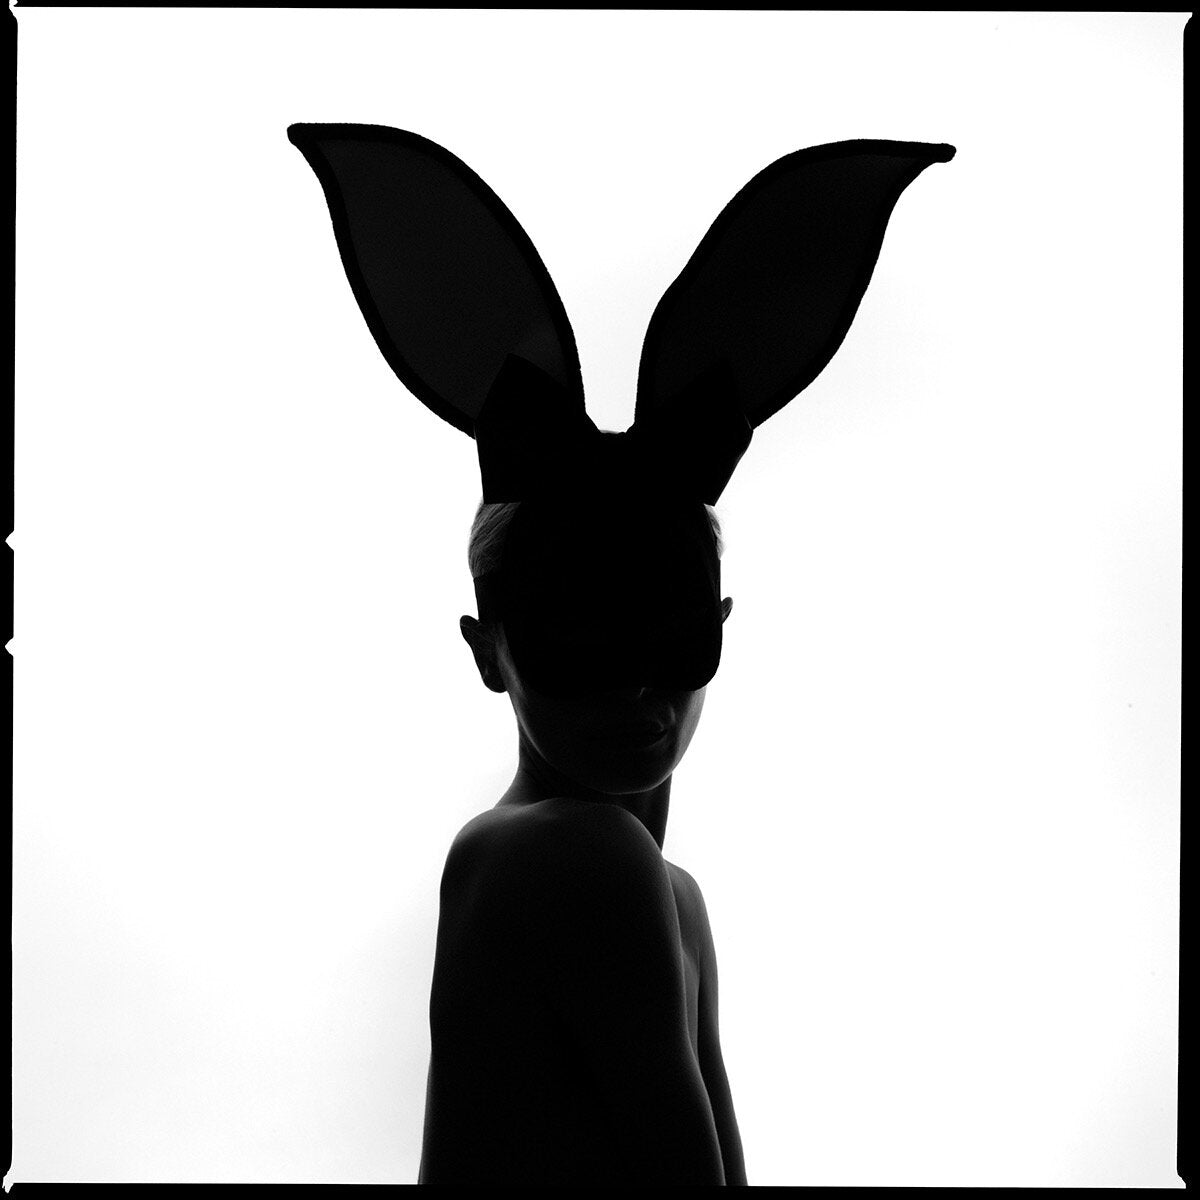  Bunny Silhouette Tyler Shields